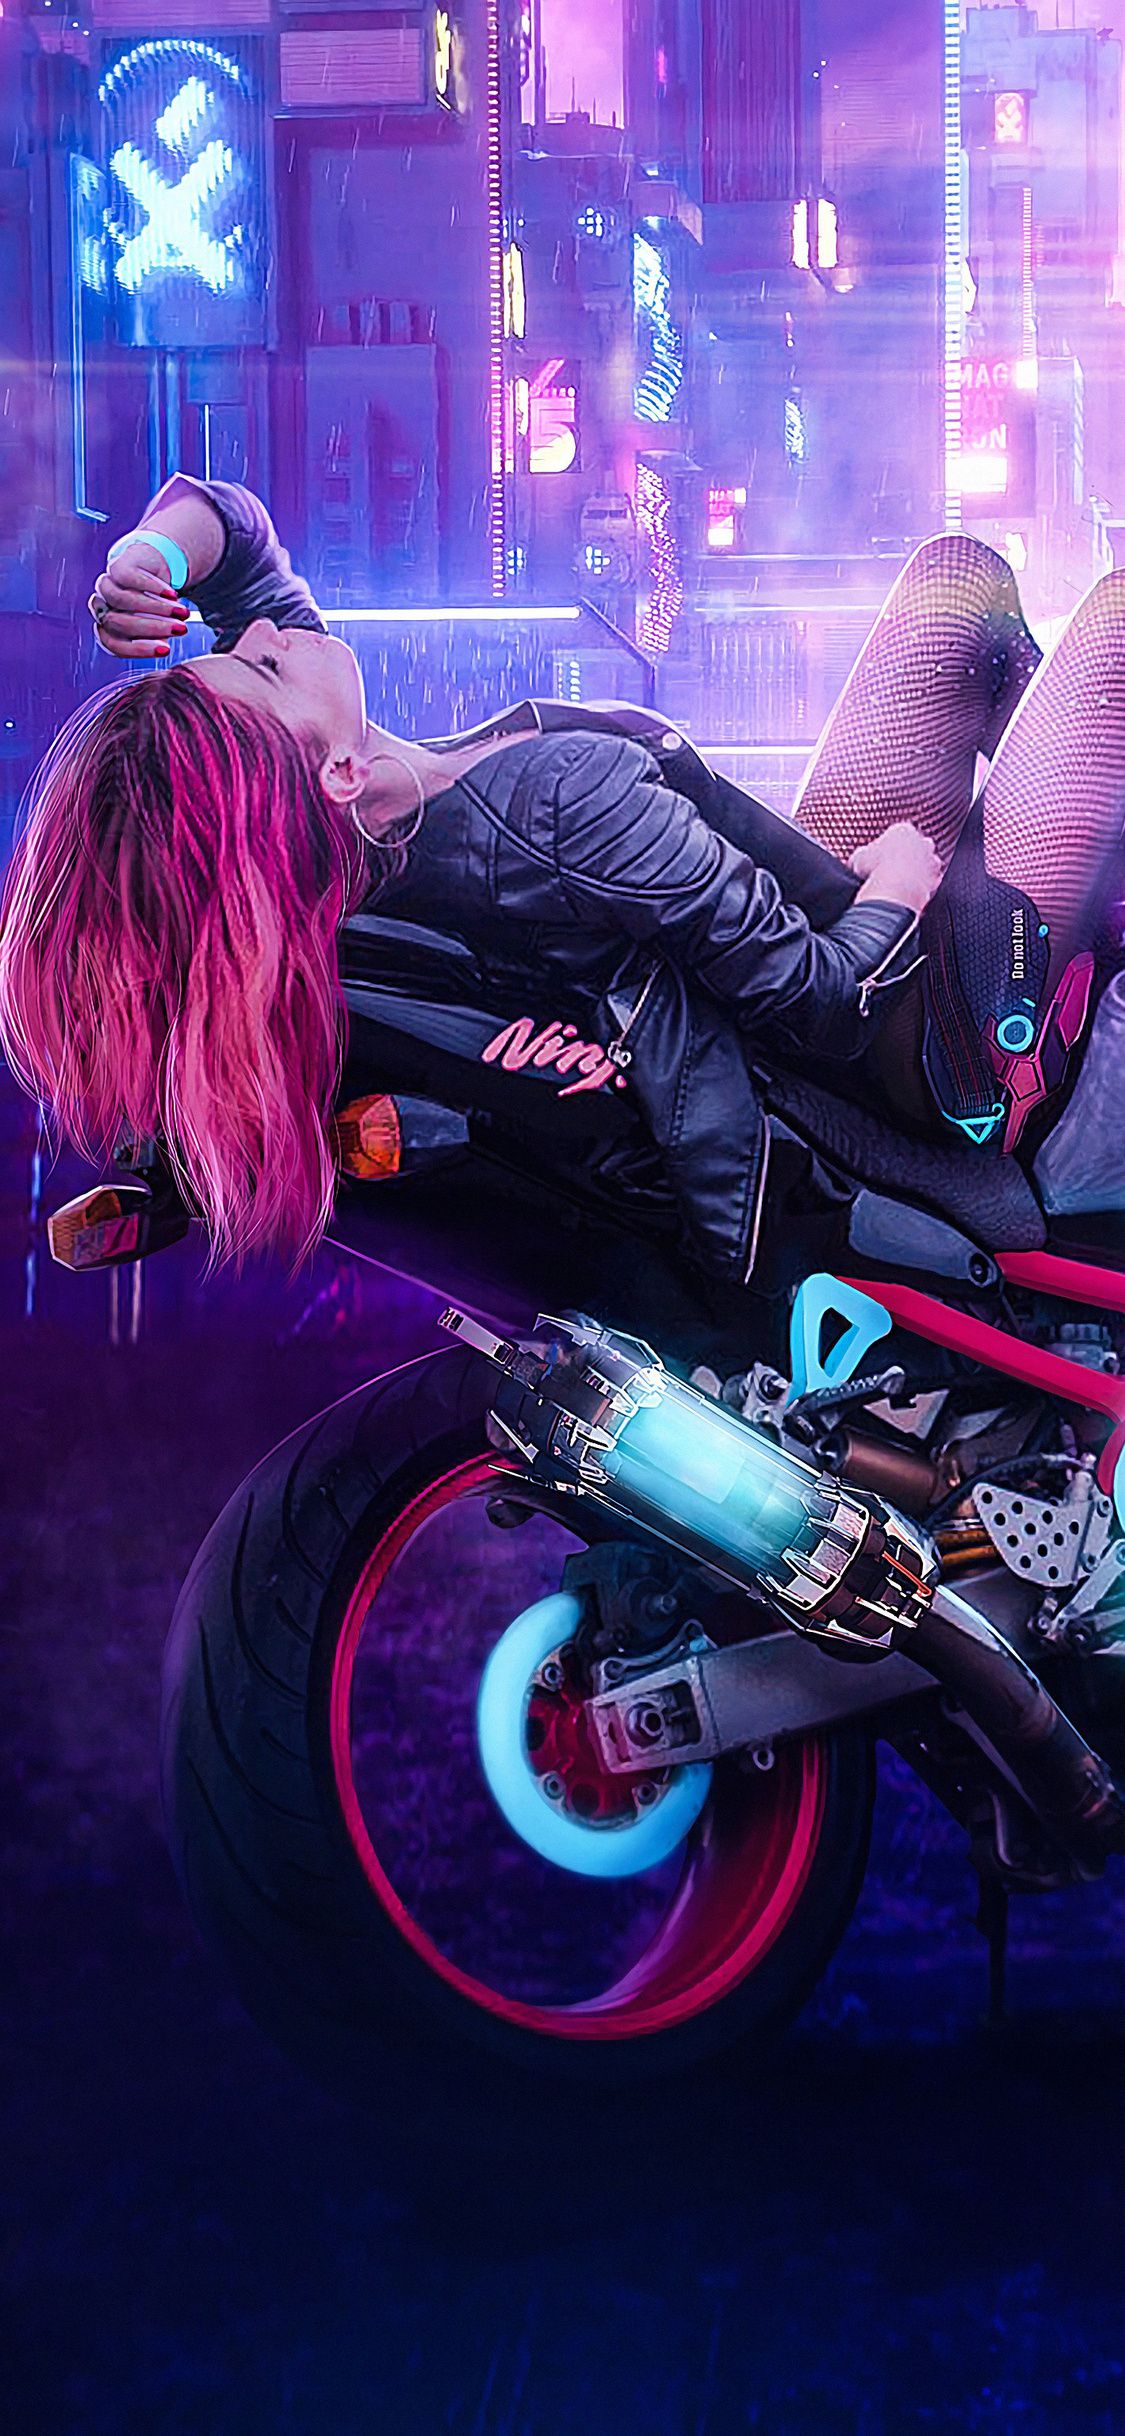 Cyberpunk Girl On Bike iPhone XS, iPhone iPhone X HD